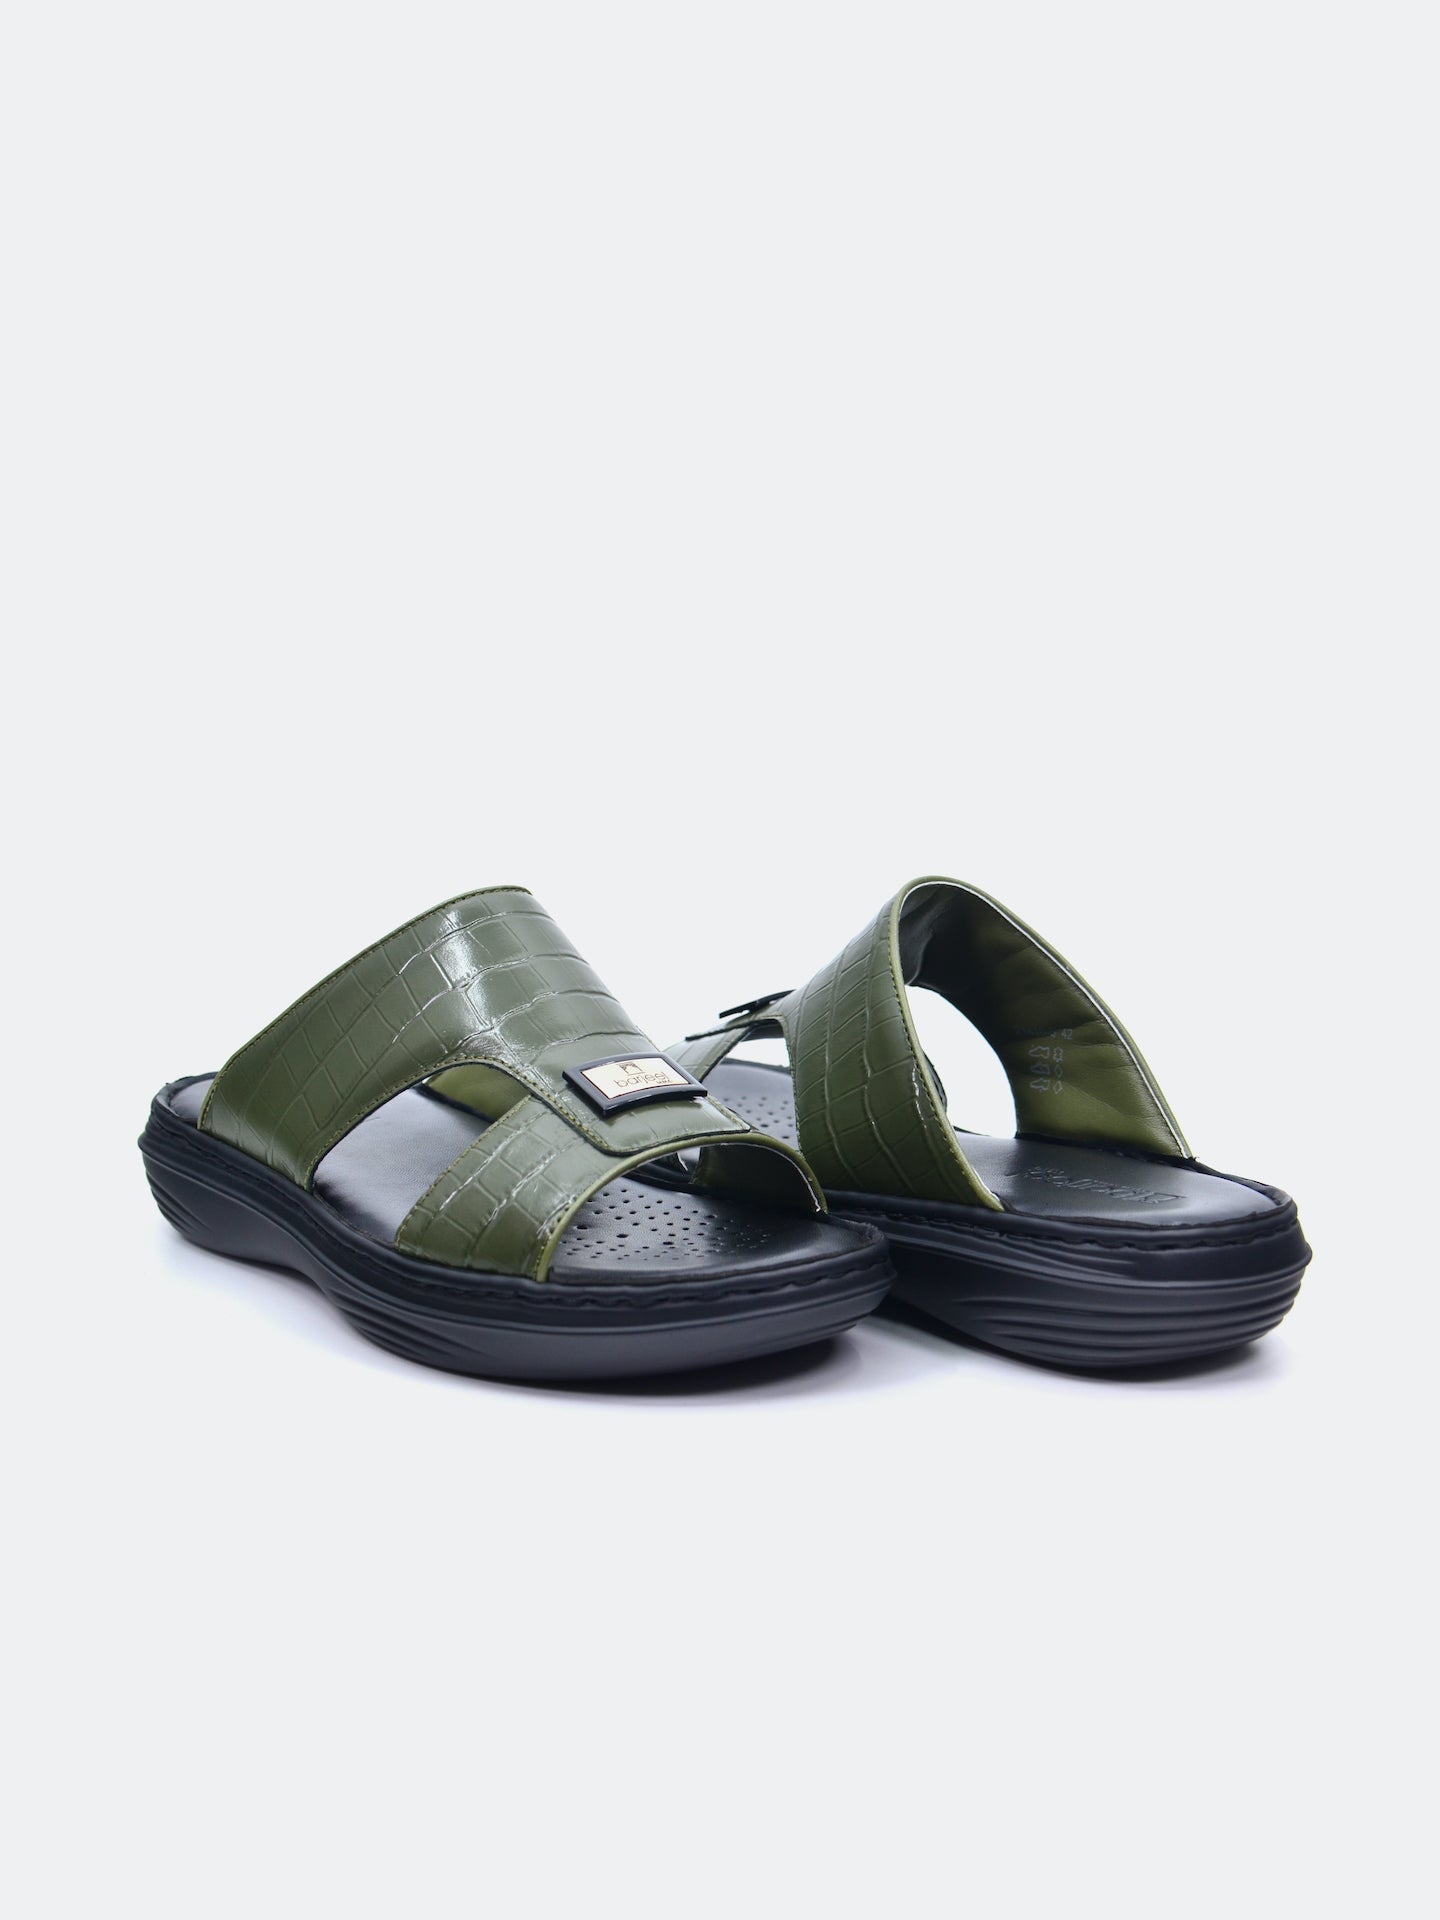 Barjeel Uno 21410-5 Men's Arabic Sandals #color_Green